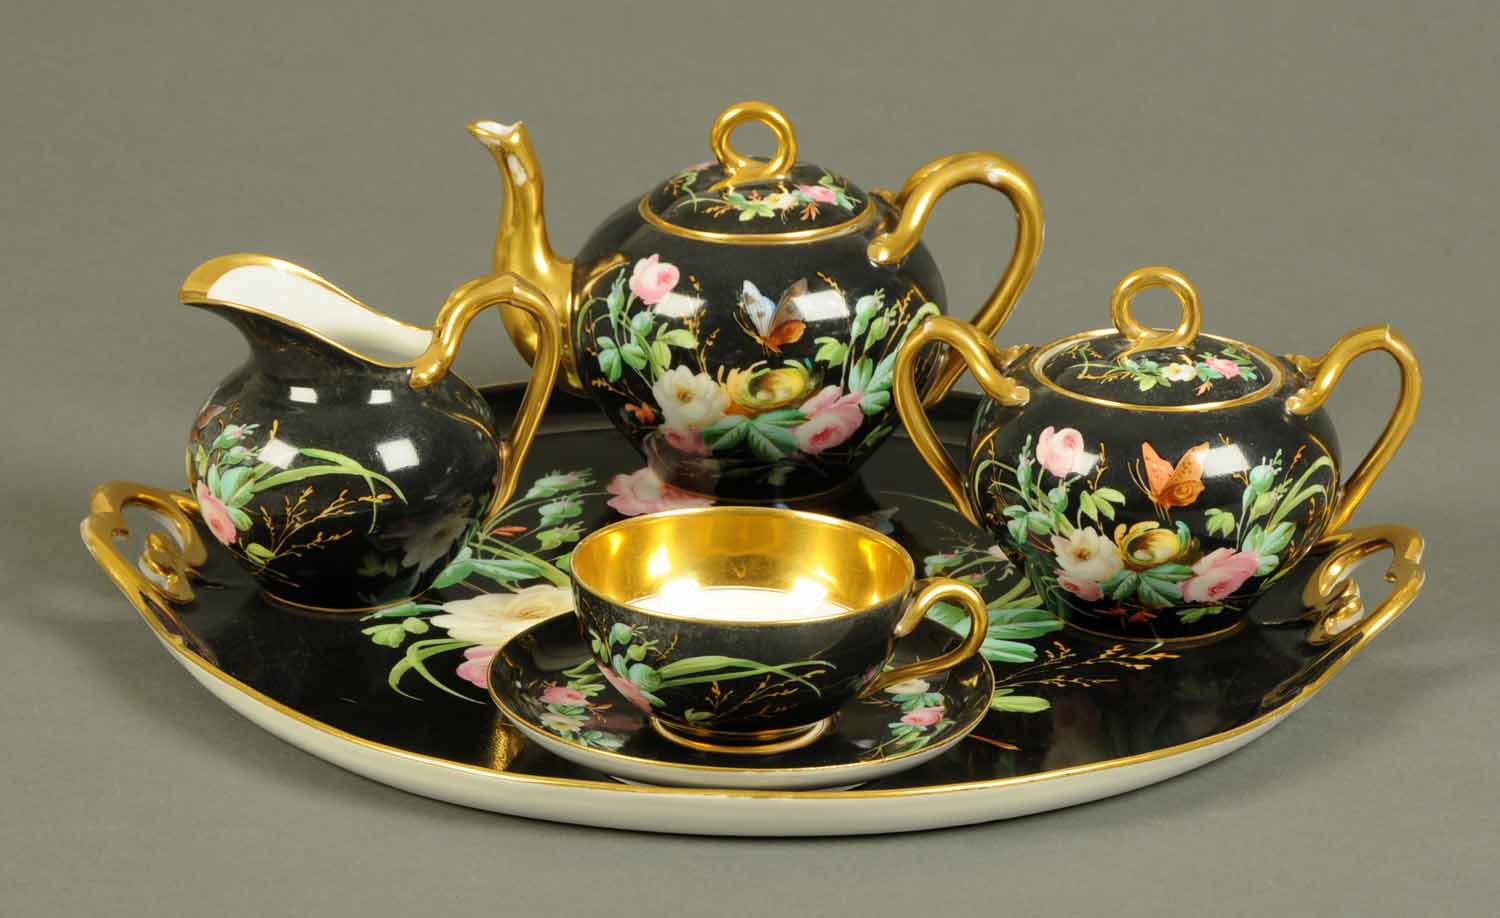 An early 20th century German porcelain Bachelors tea service, comprising tray, teapot, sugar